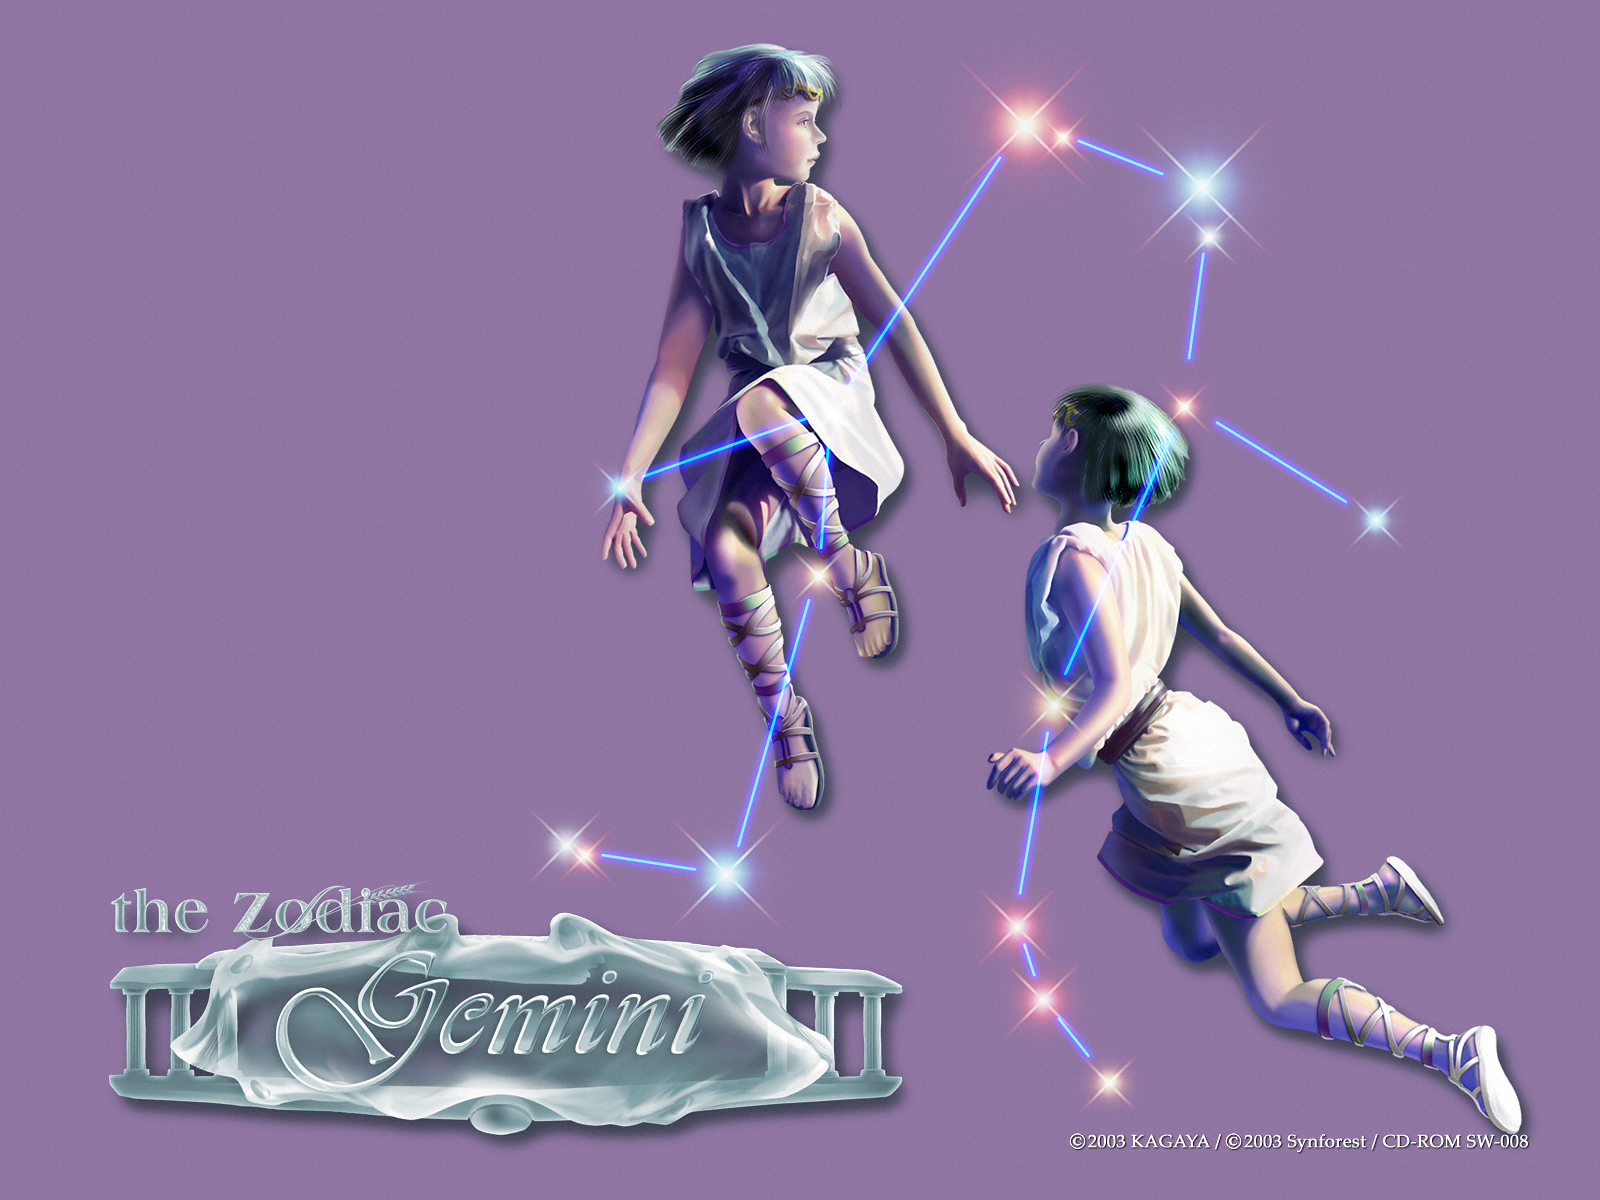 General 1600x1200 kagaya Zodiac constellations Gemini watermarked digital art simple background stars short hair minimalism dress